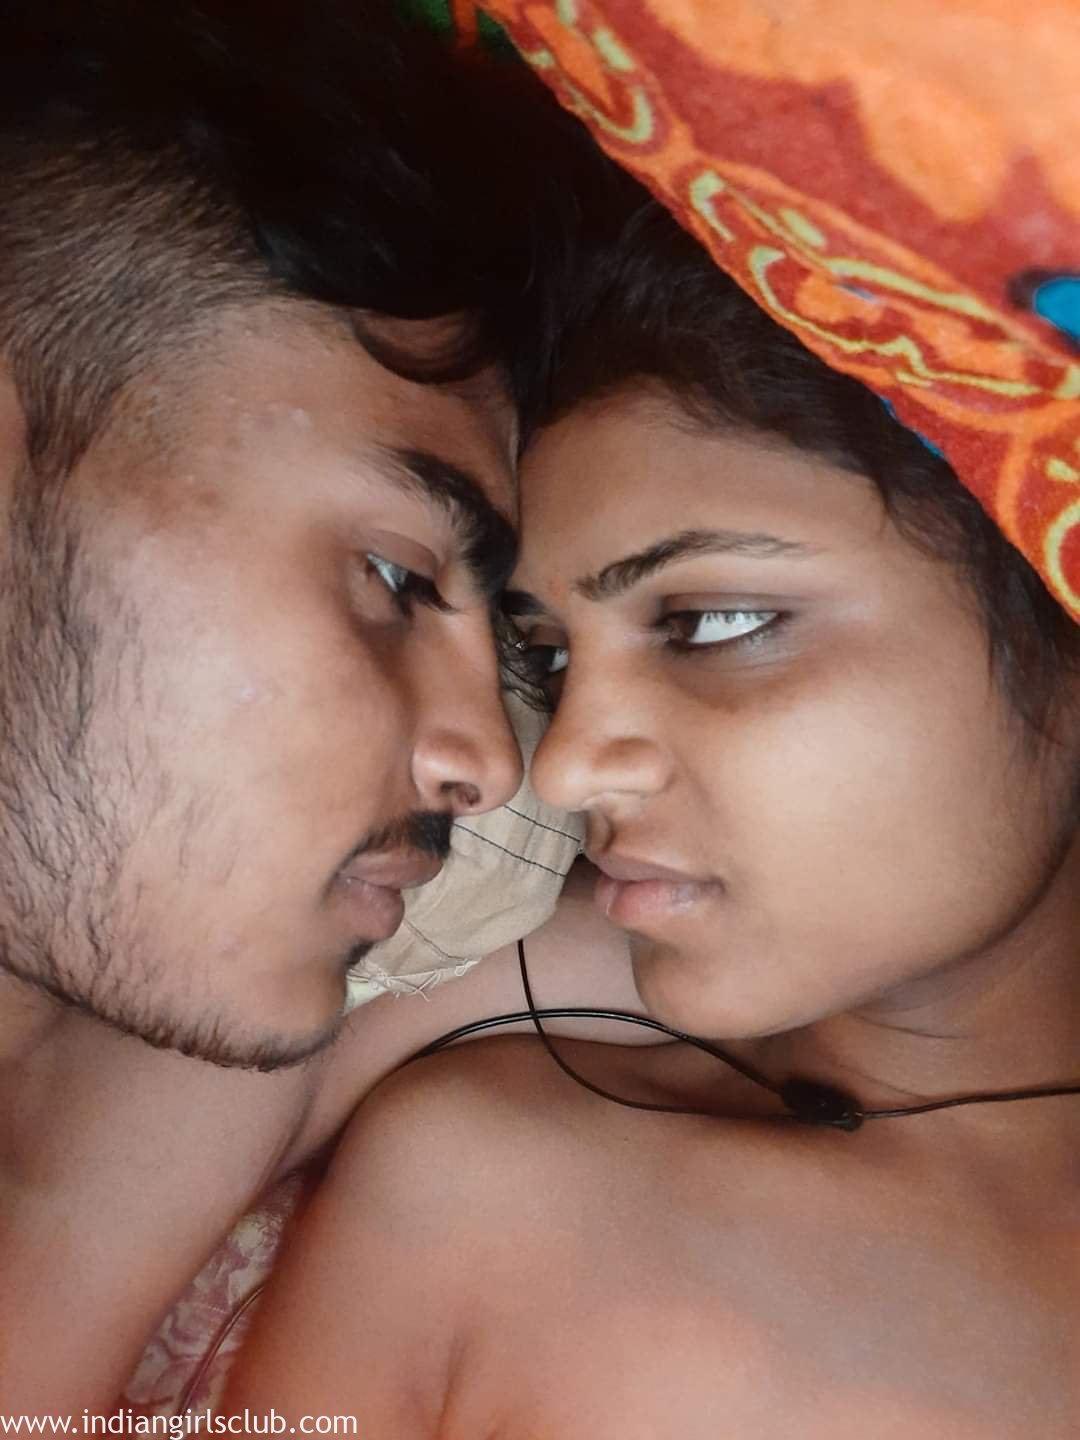 Tamil College Couple Romantic Bedroom Sex In Desi Style pic photo